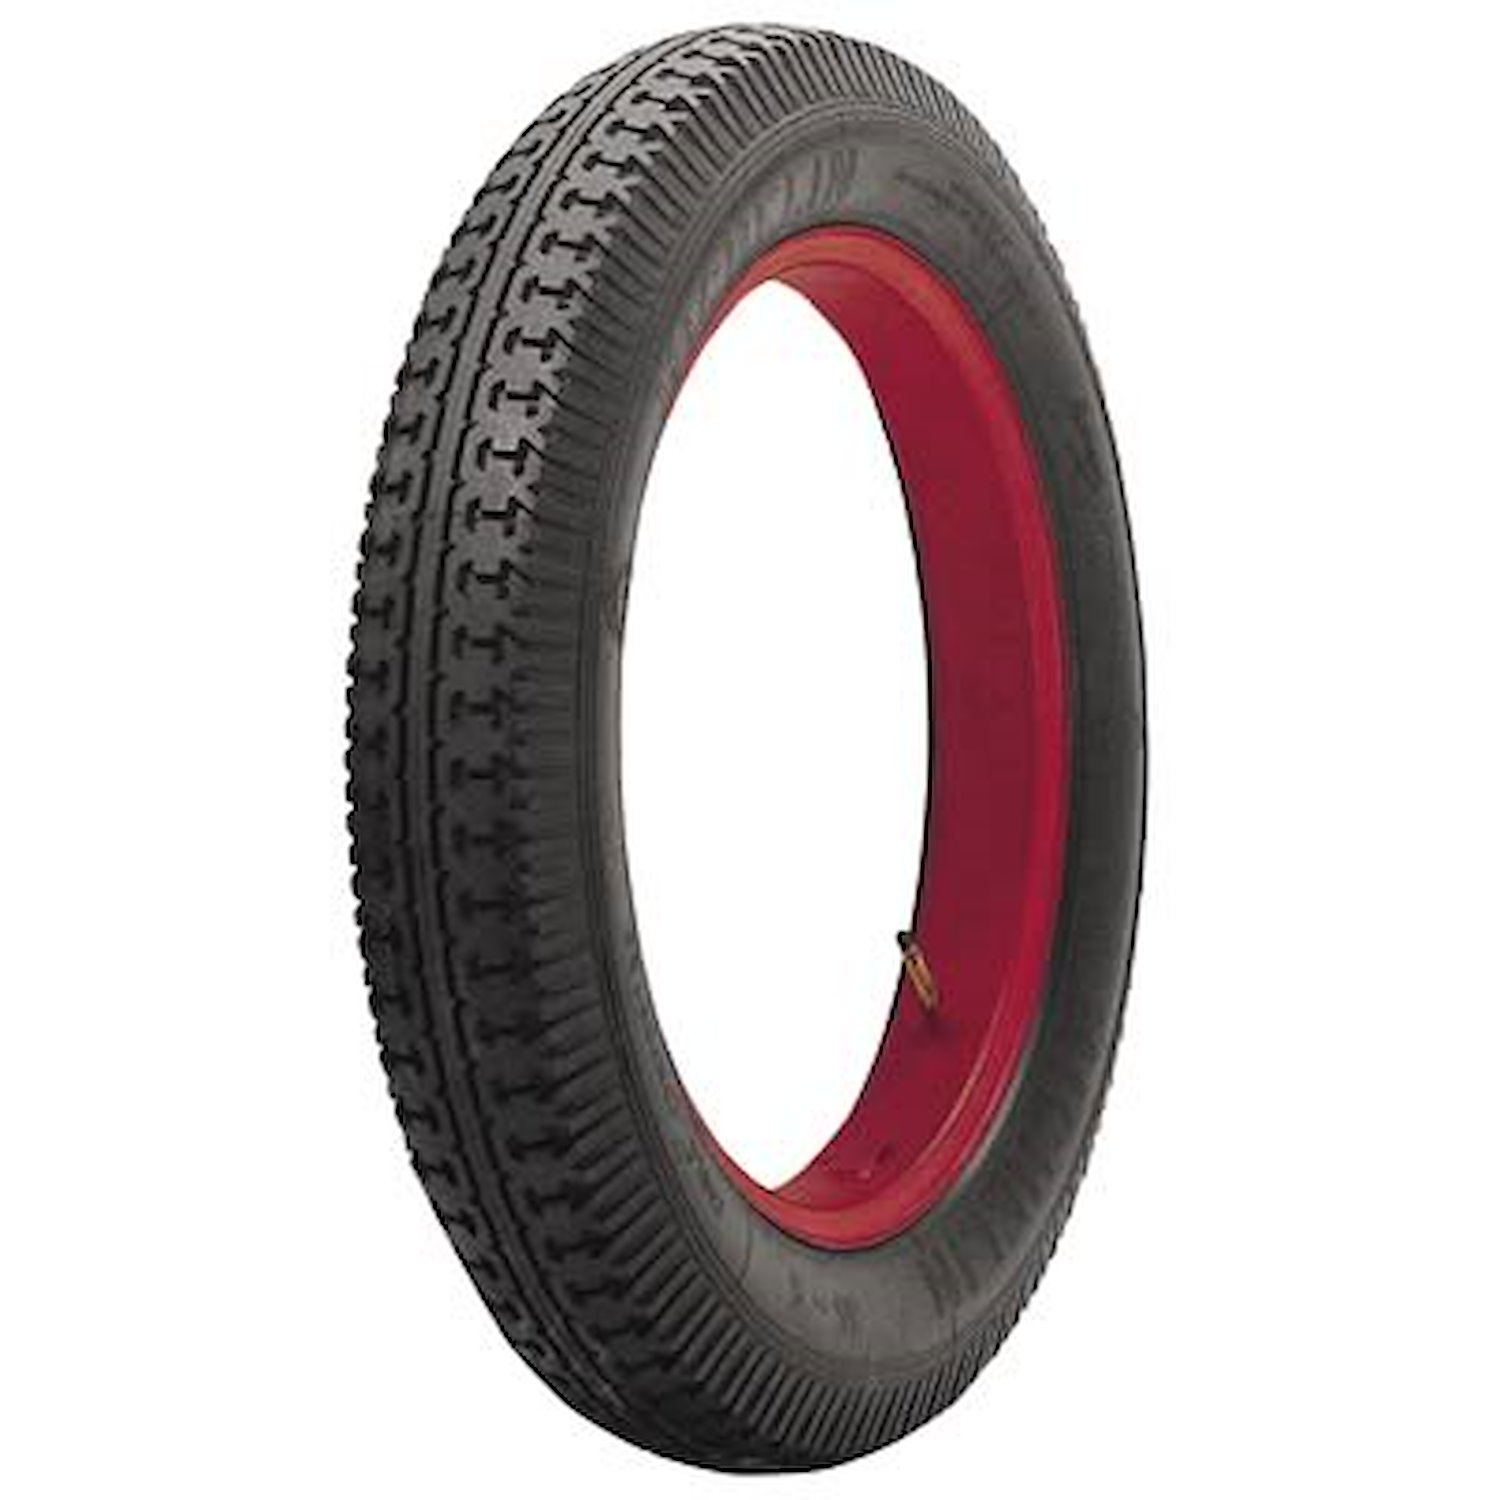 71373 Tire, Michelin Double Rivet, 475/525-18